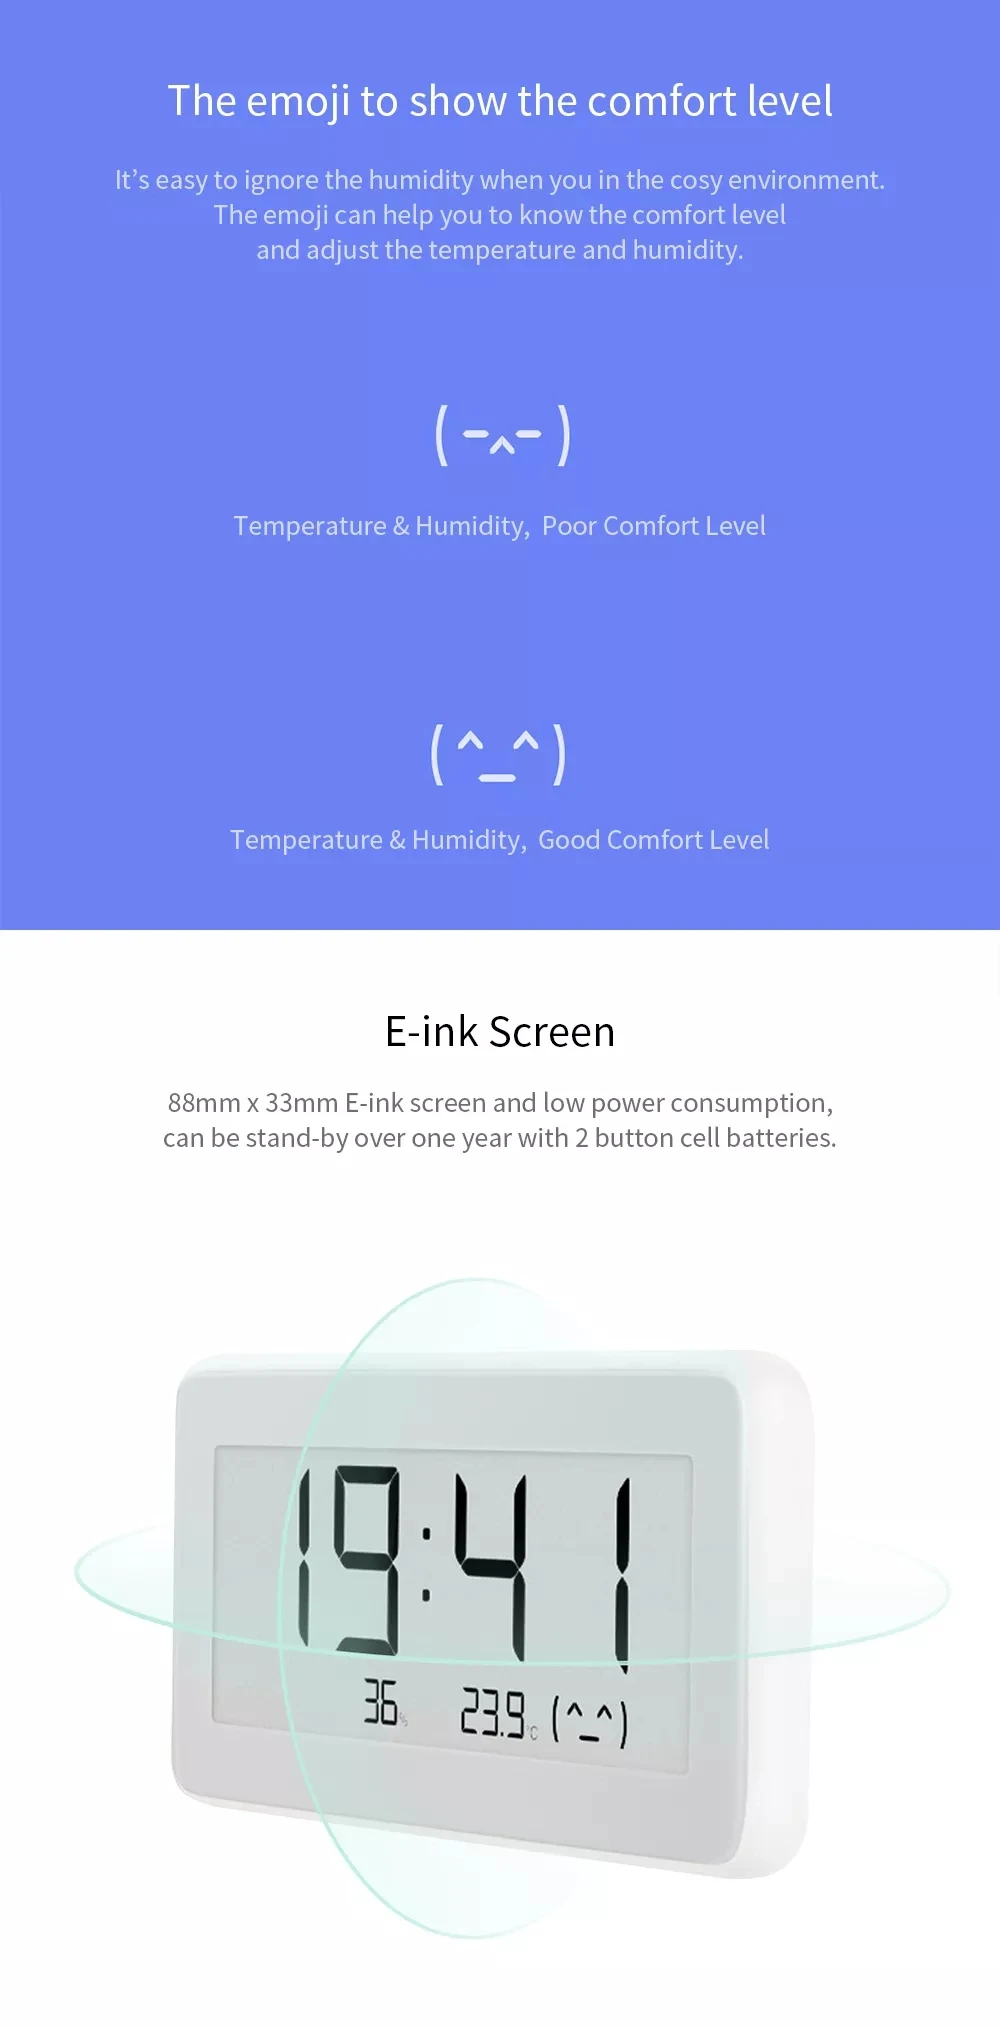 Xiao mi jia Bluetooth температура Hu mi dity сенсор Pro E-link ЖК-экран цифровой термометр измеритель влажности Смарт связь mi APP